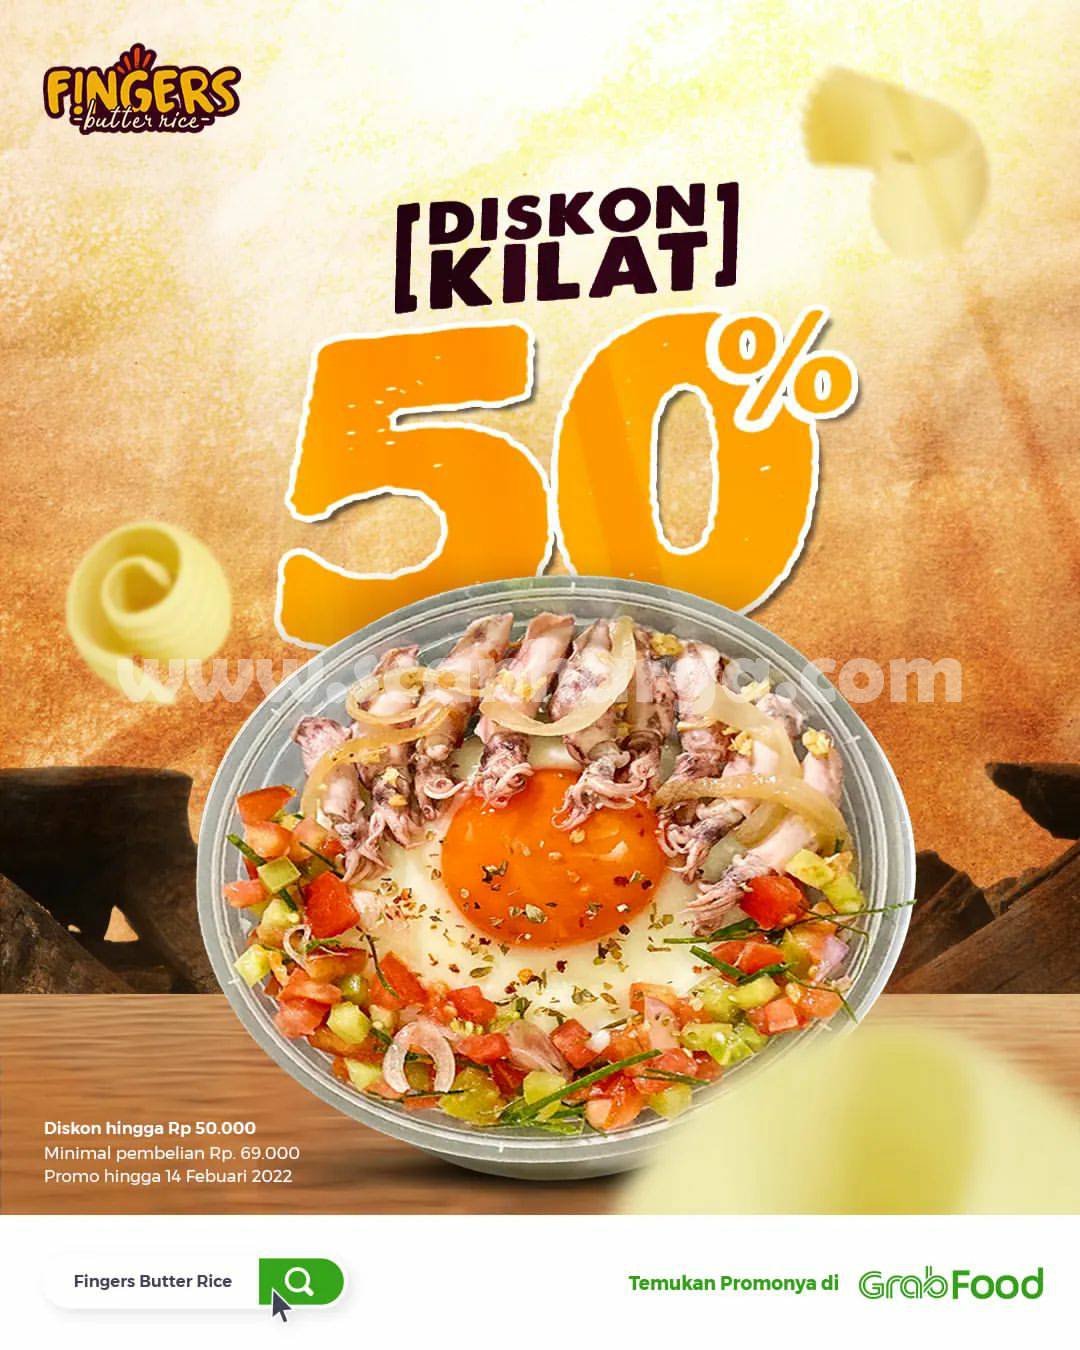 Promo Fingers Butter Rice Diskon Kilat 50% via Grabfood